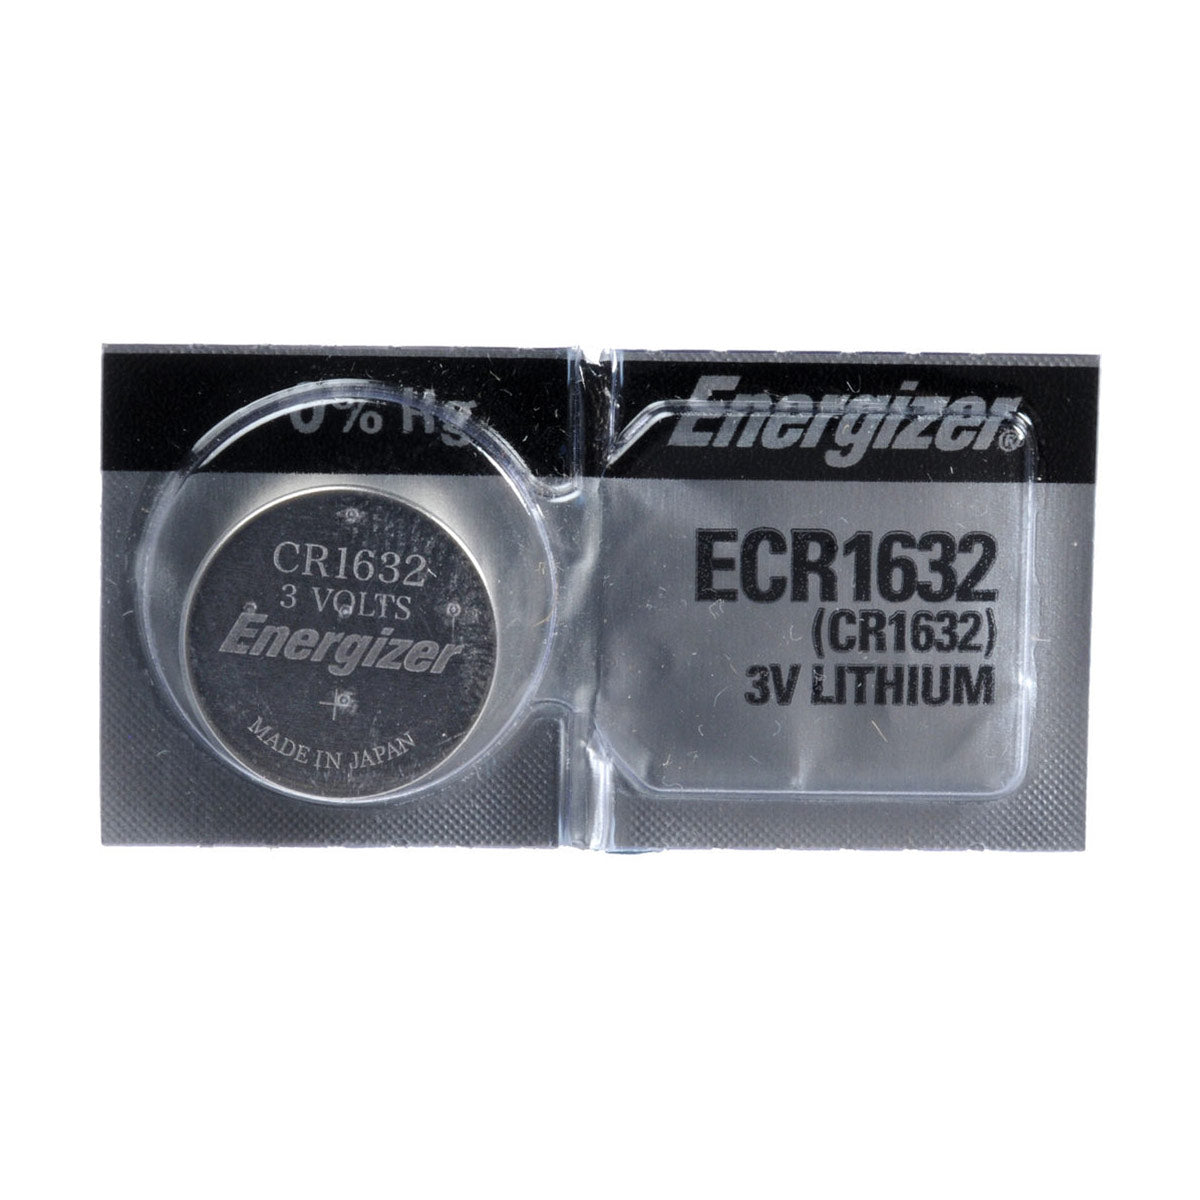 Energizer CR1632 3V Lithium Coin Battery - 2 Pack 